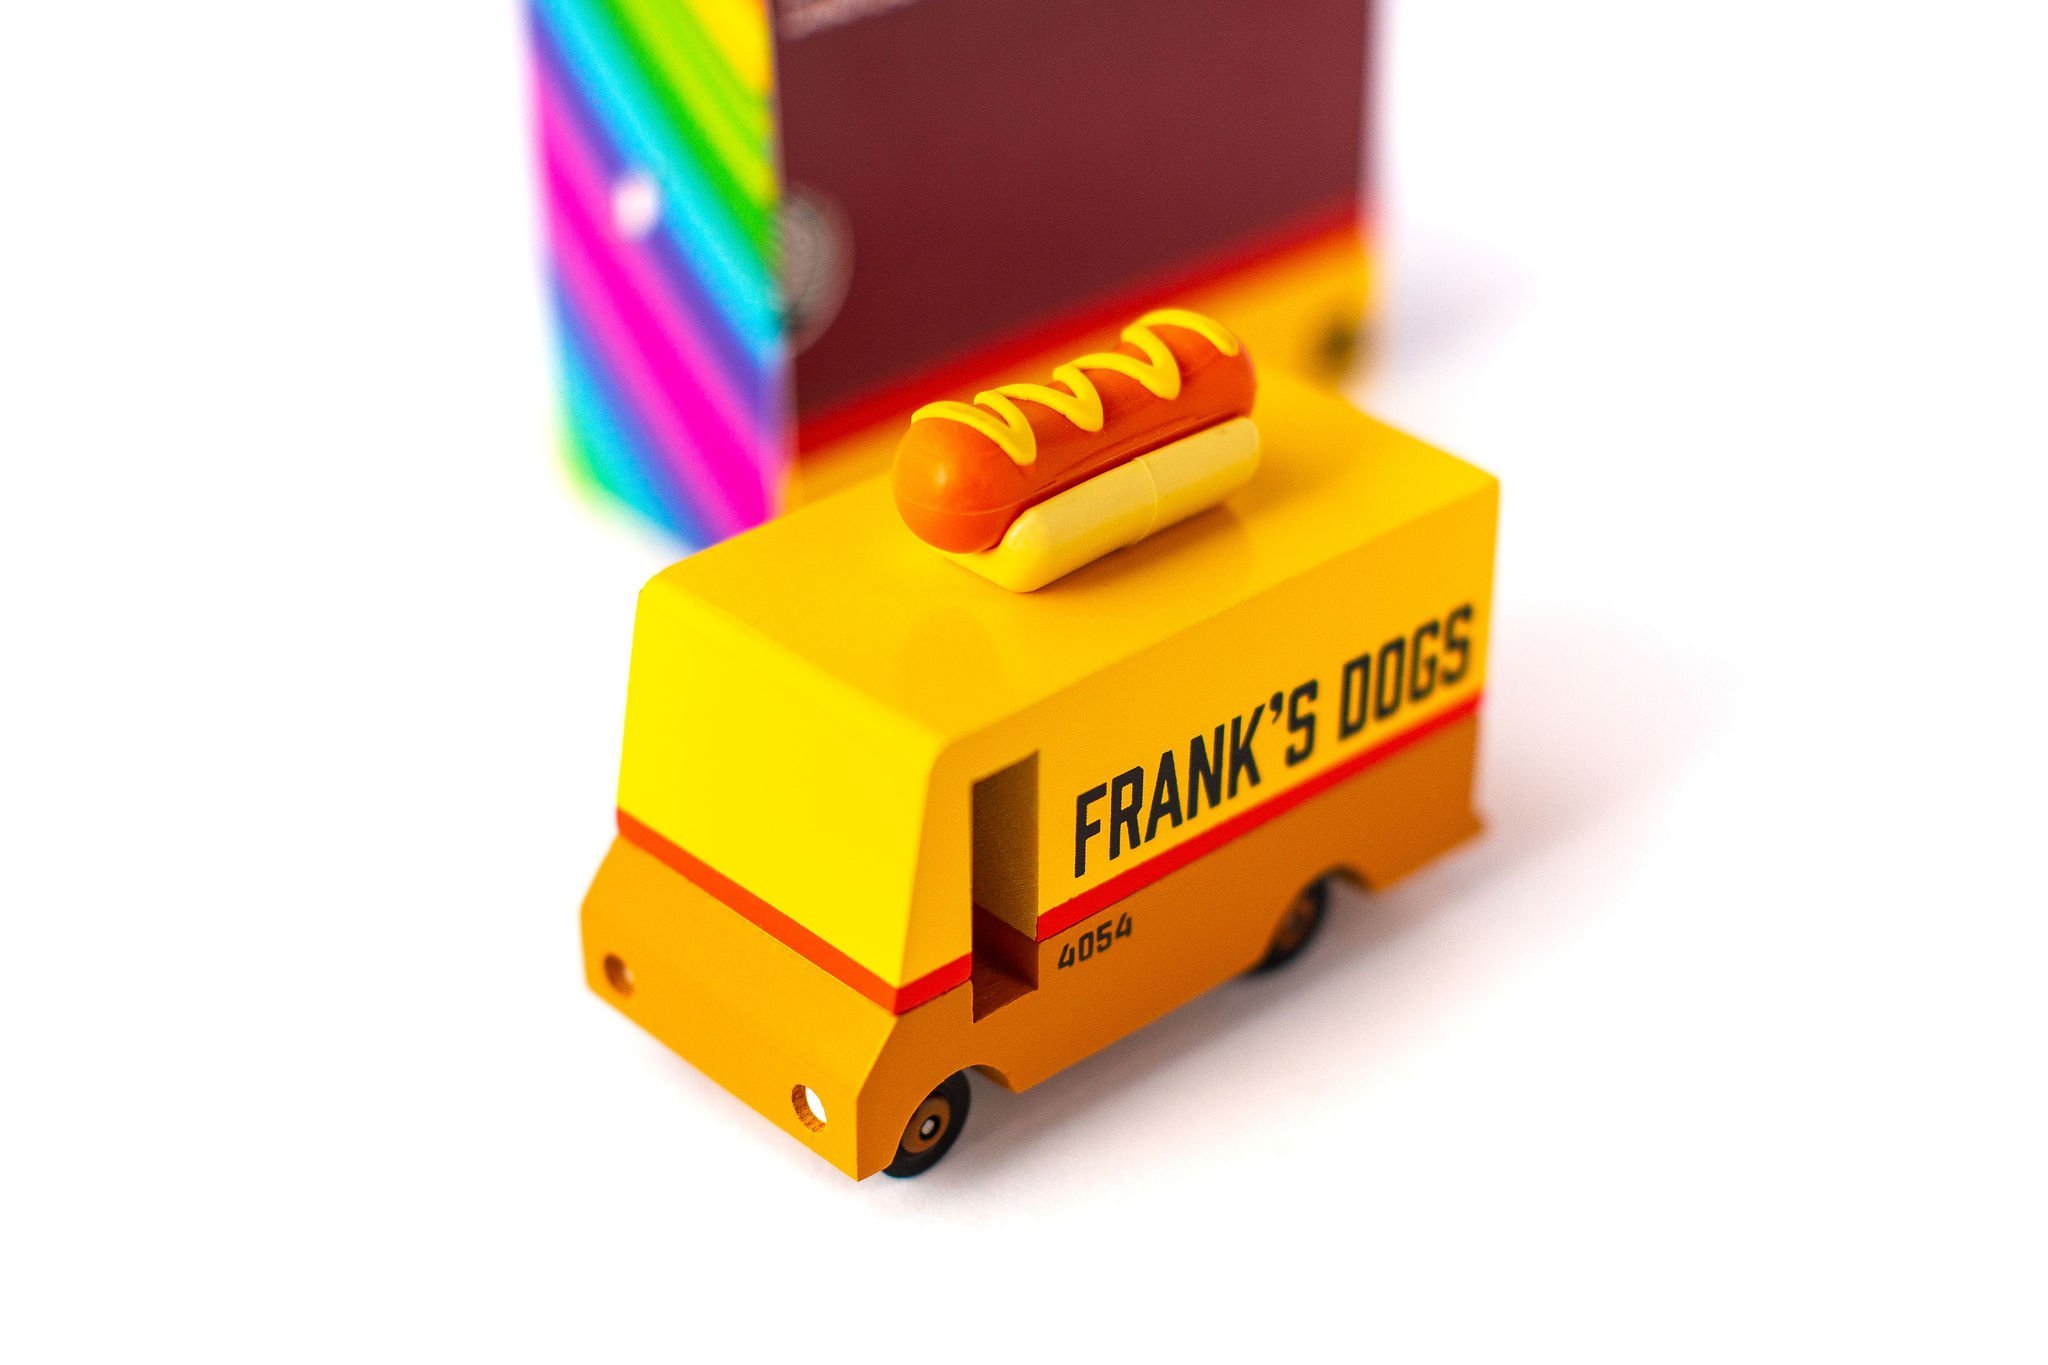 Candycar - Hotdog Van